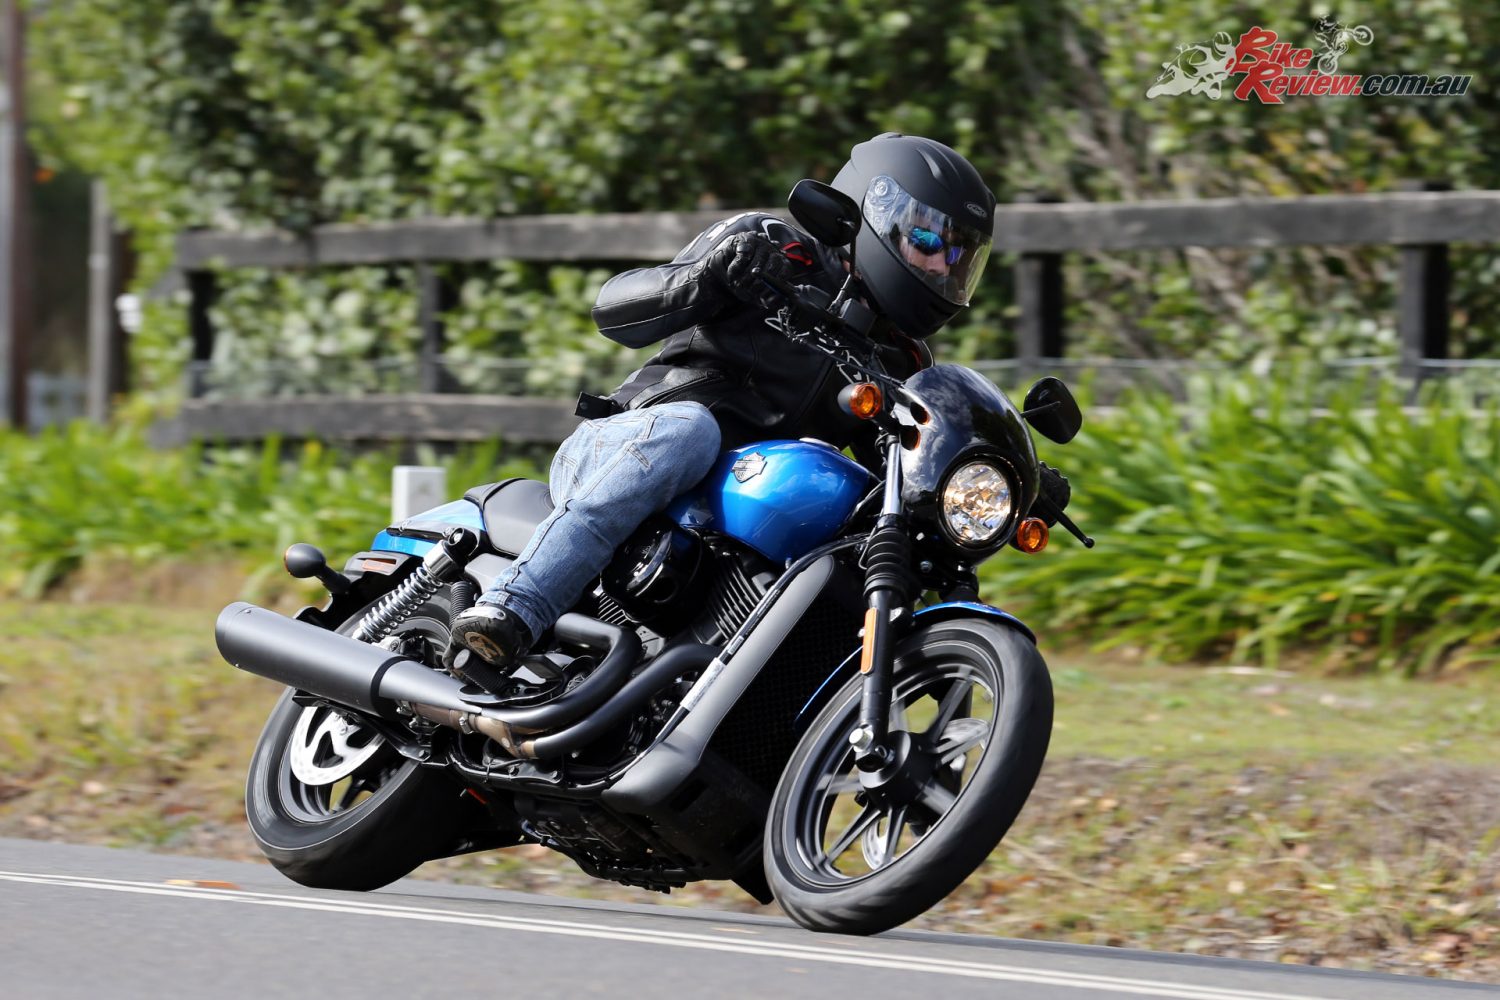 Harley-Davidson's Street 500 LAMS machine